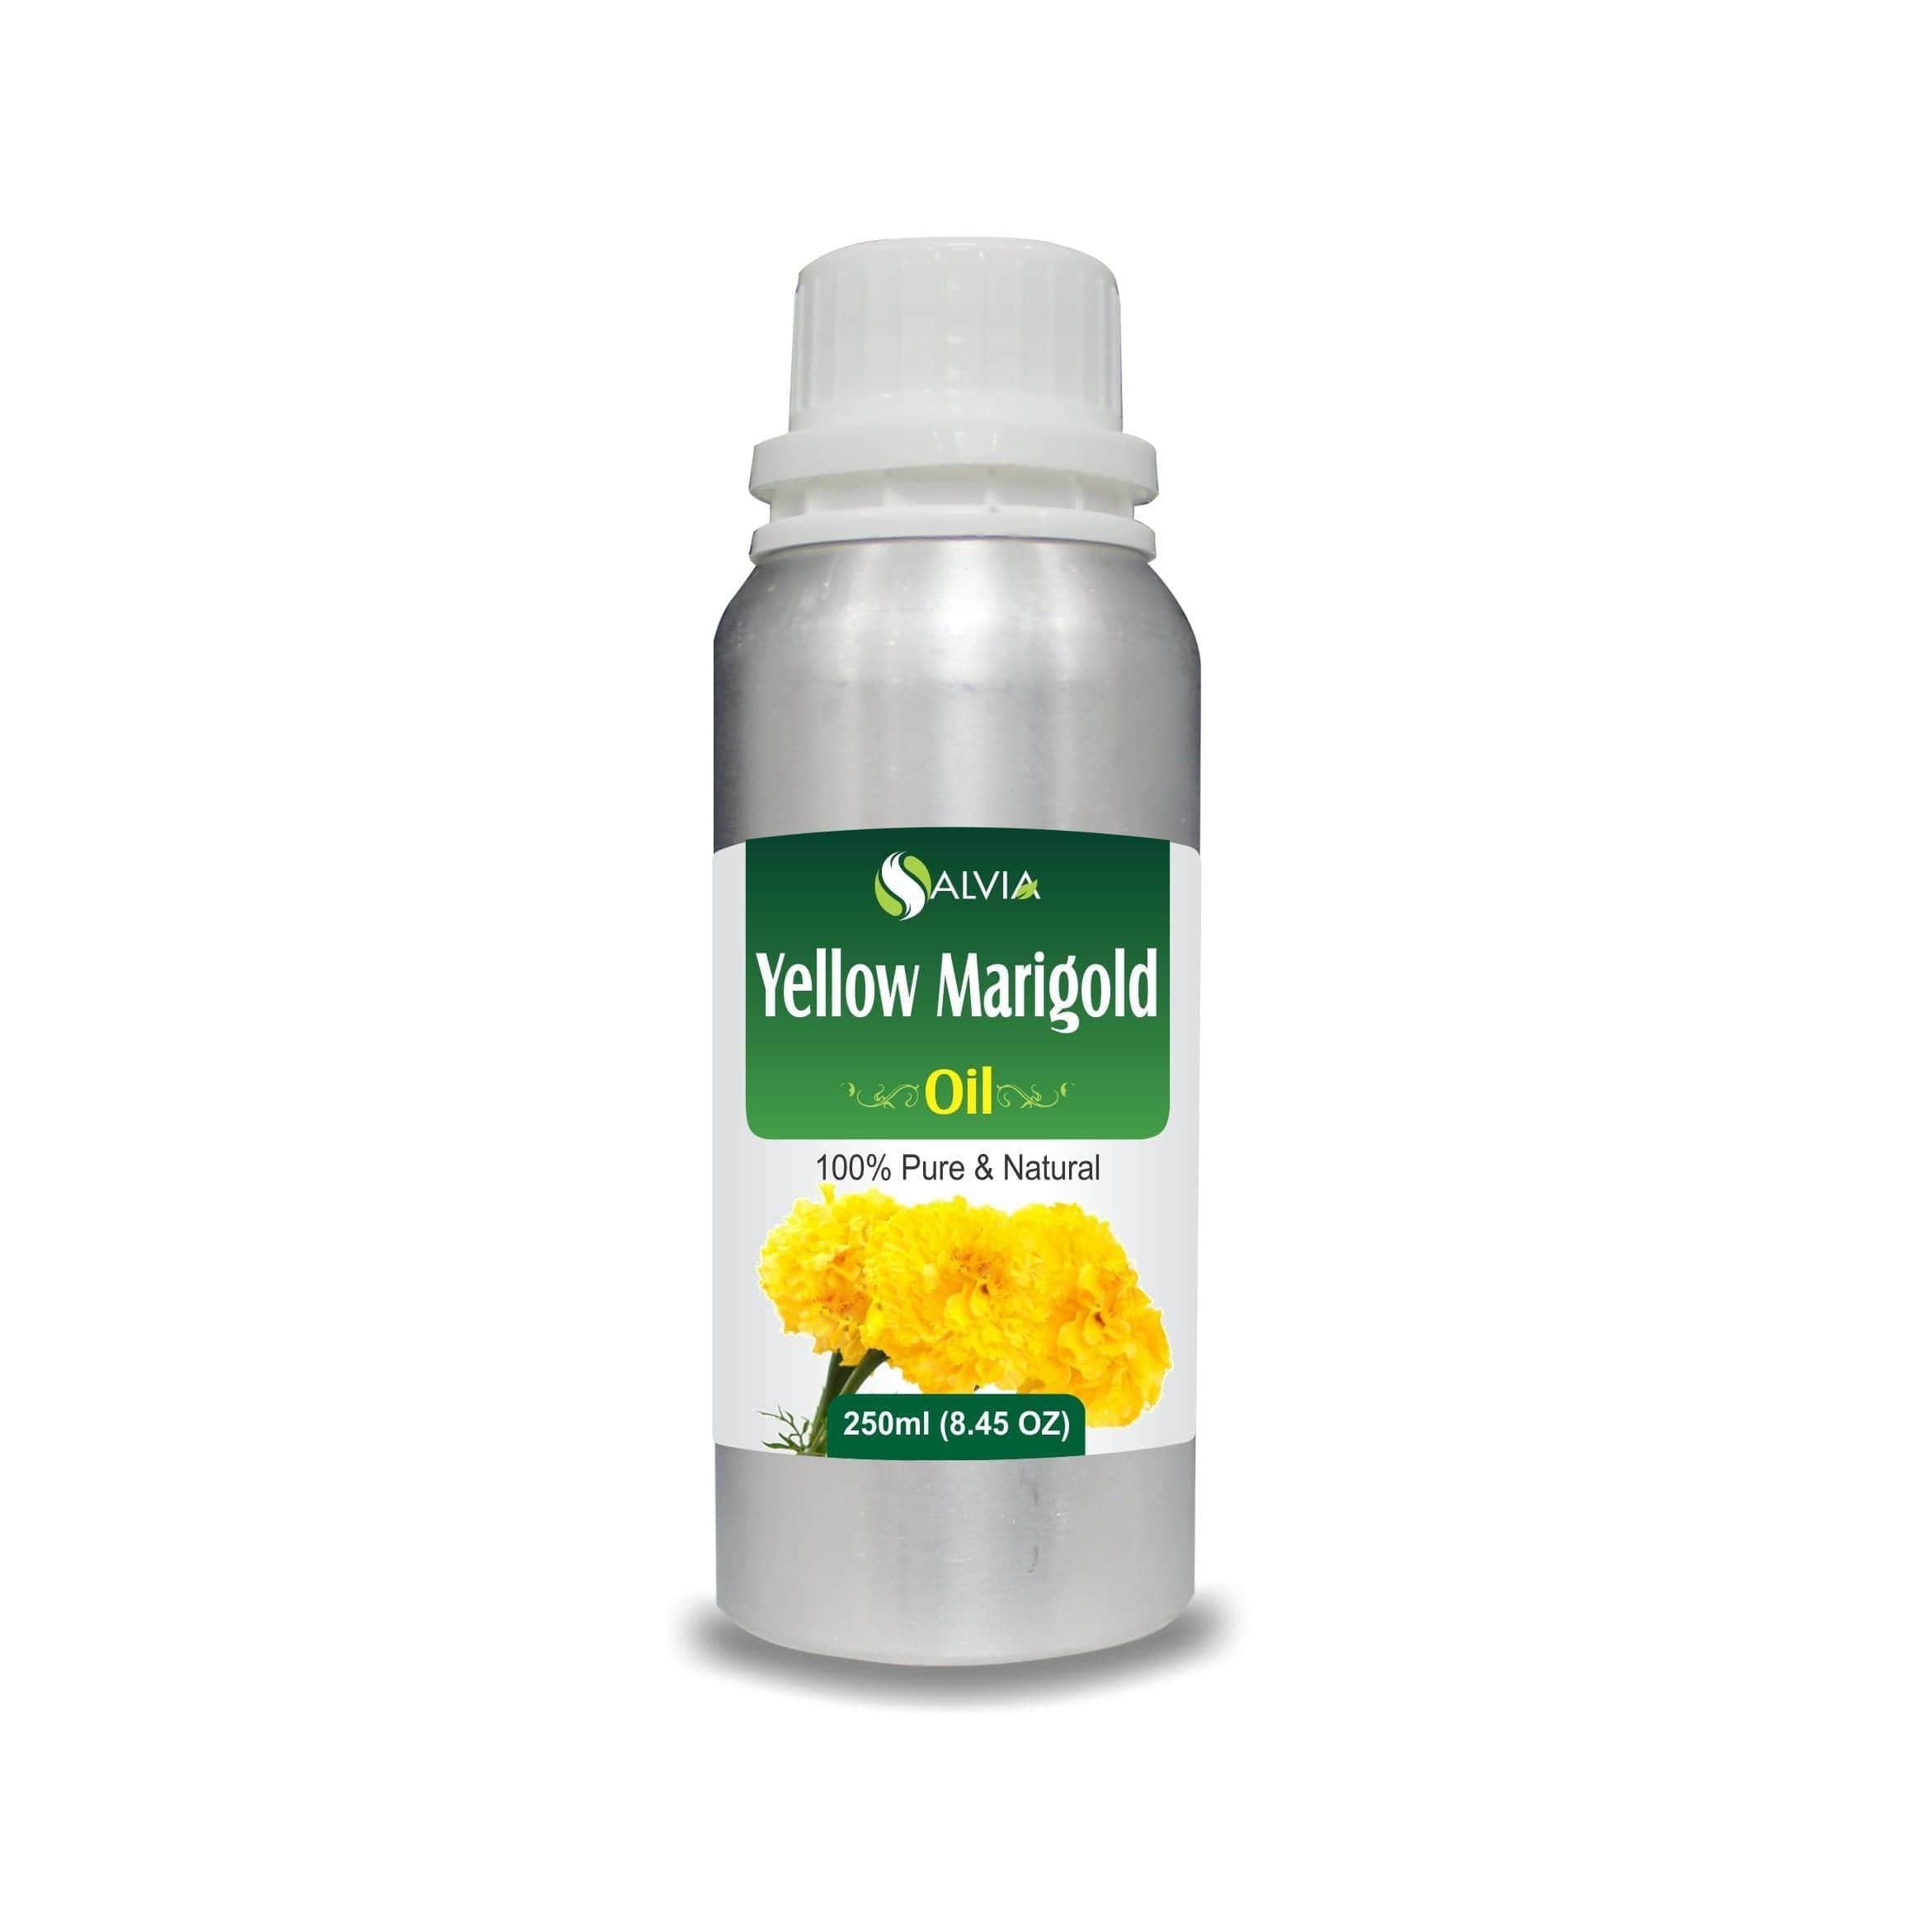  Yellow Marigold Oil